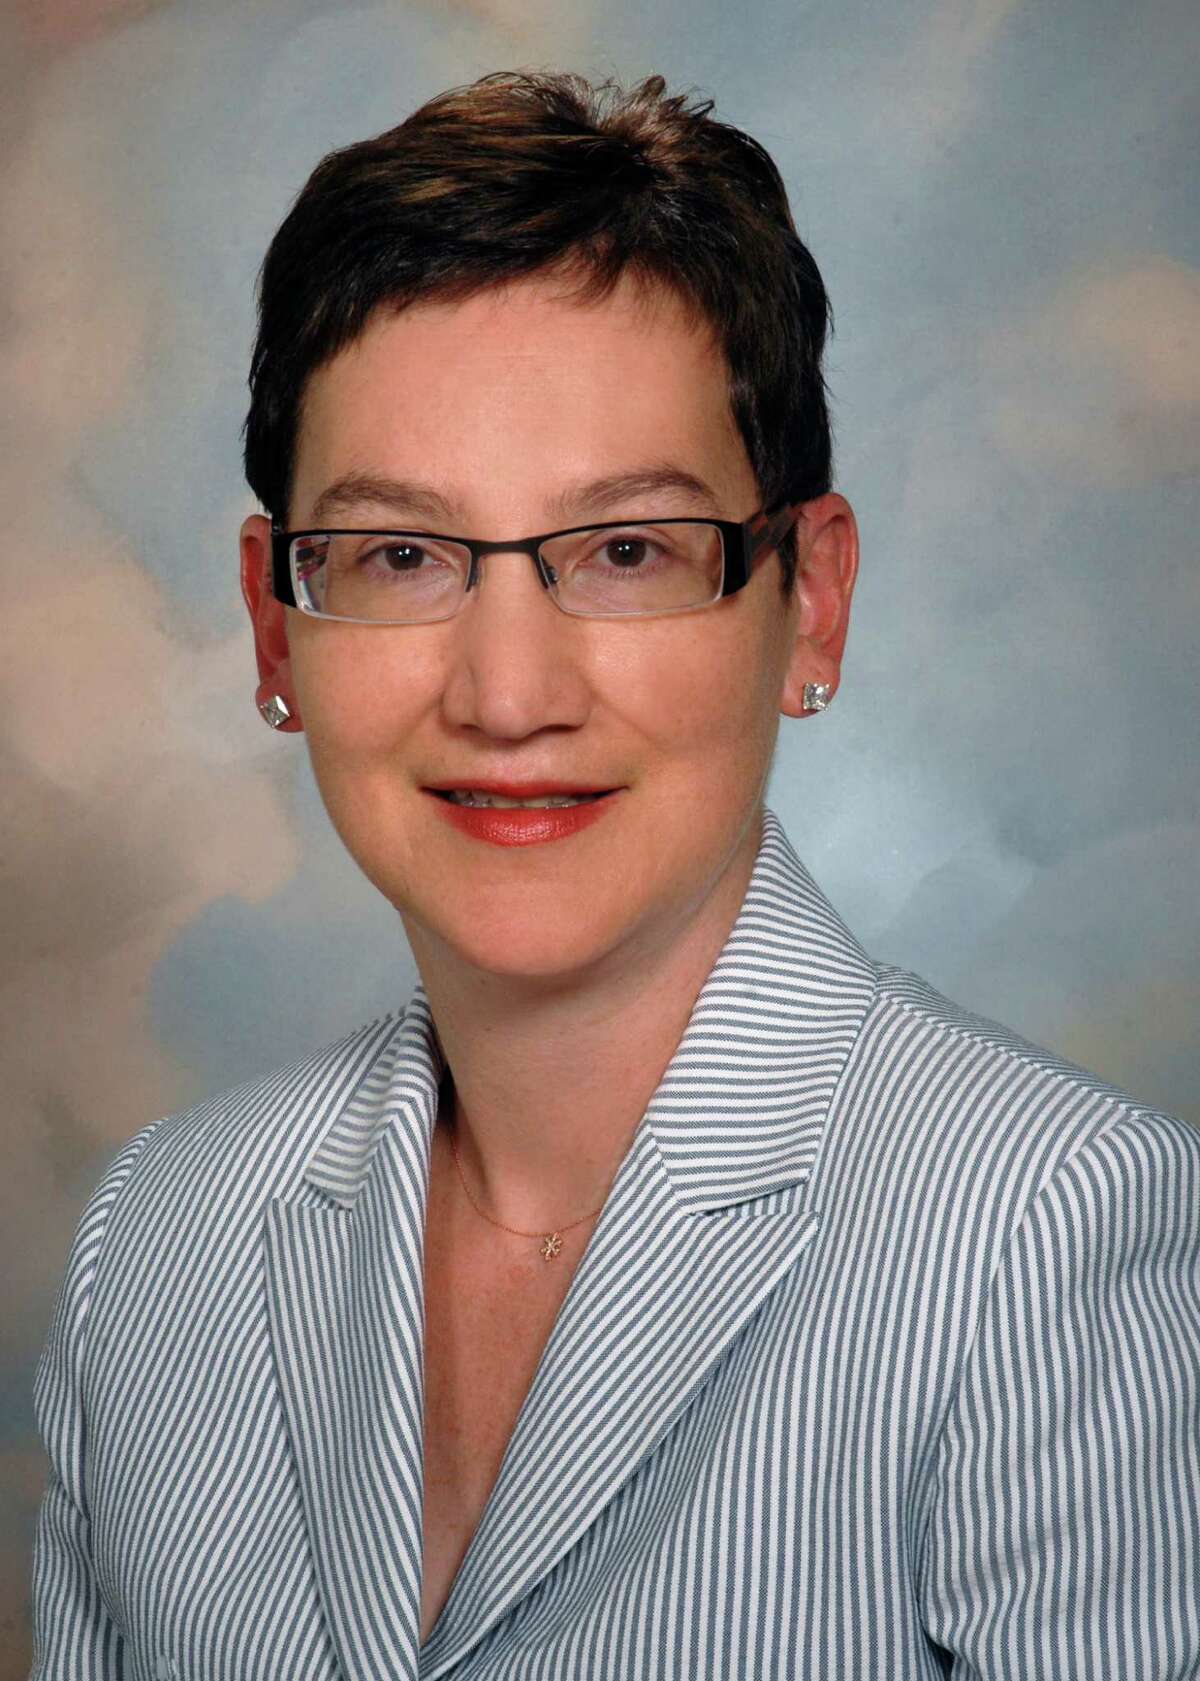 20. Dr. Carrie Byington, vice chancellor health services Texas A&M Health Science Center Compensation: $870,834